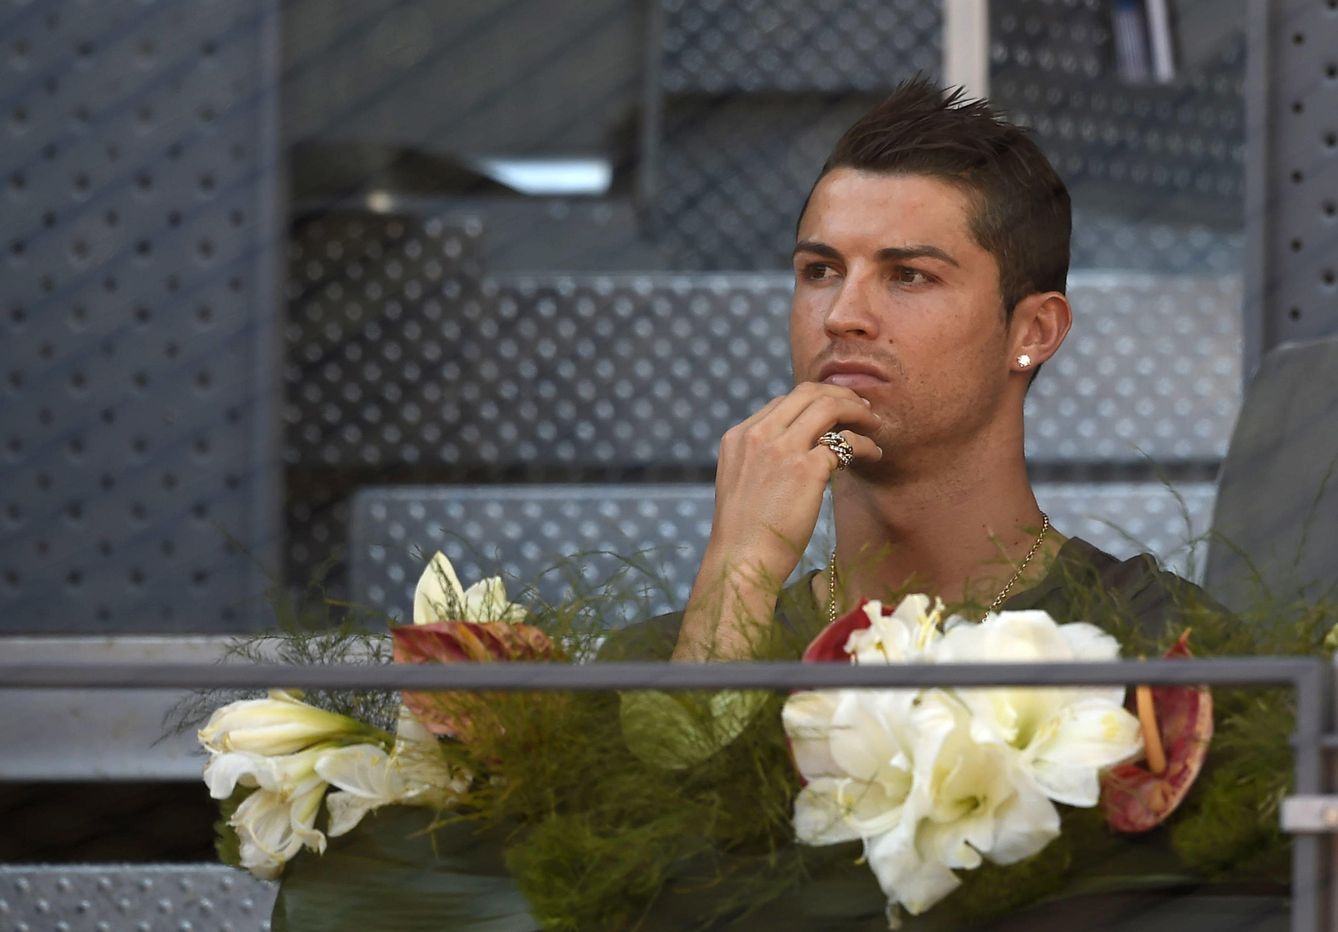 Foto: El futbolista Cristiano Ronaldo durante el torneo Mutua Madrid Open (Gtres)